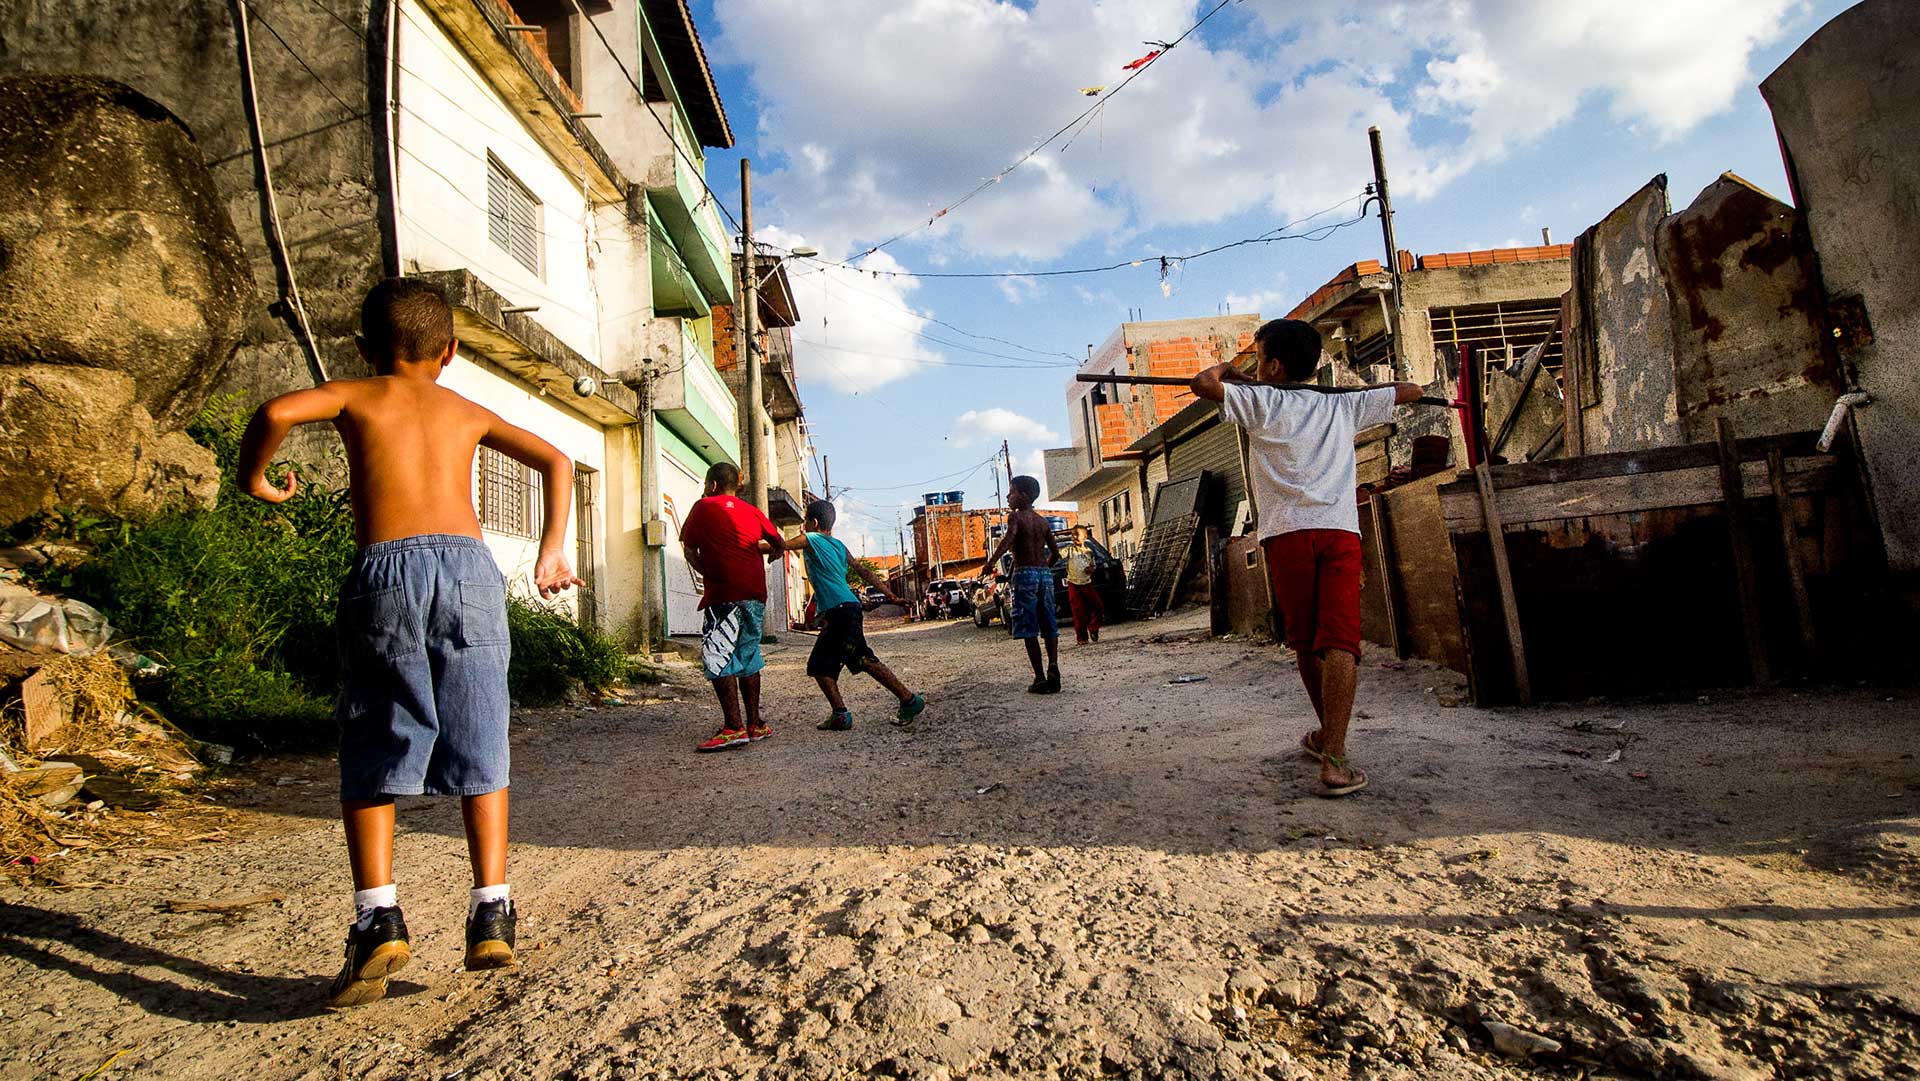 street football Brazil